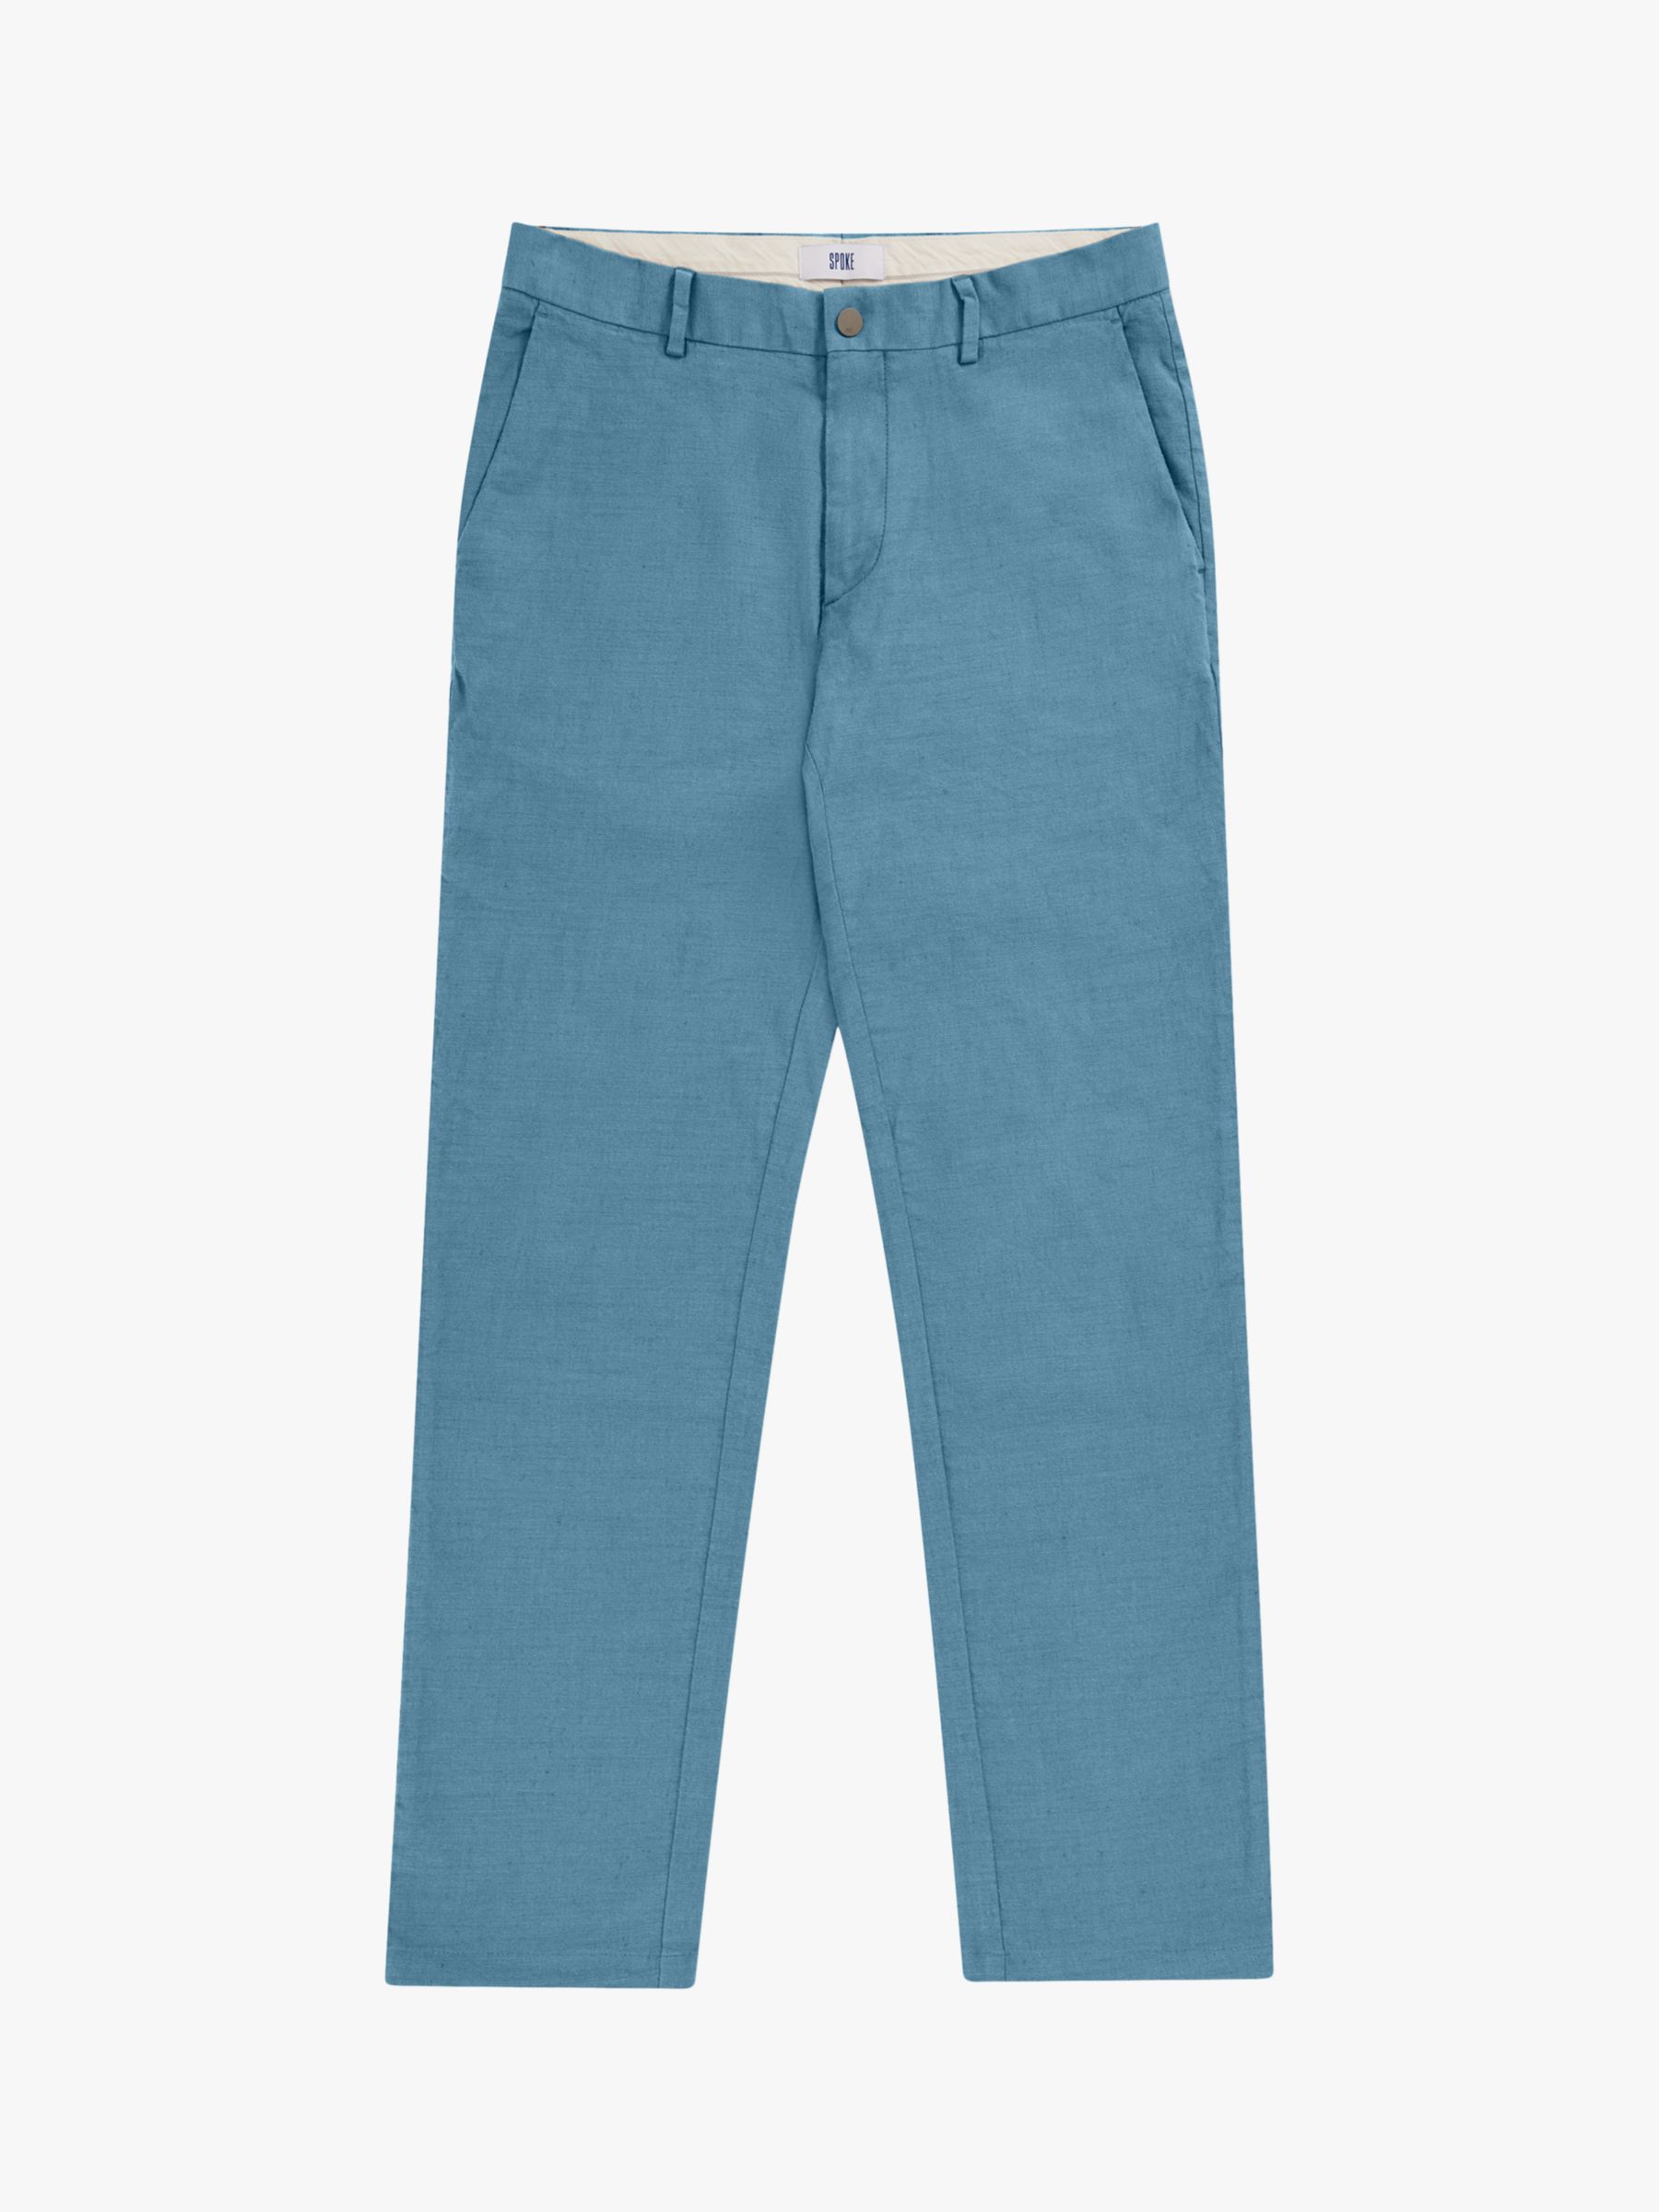 SPOKE Linen Sharps Regular Thigh Trousers, Aegean, W34/L33